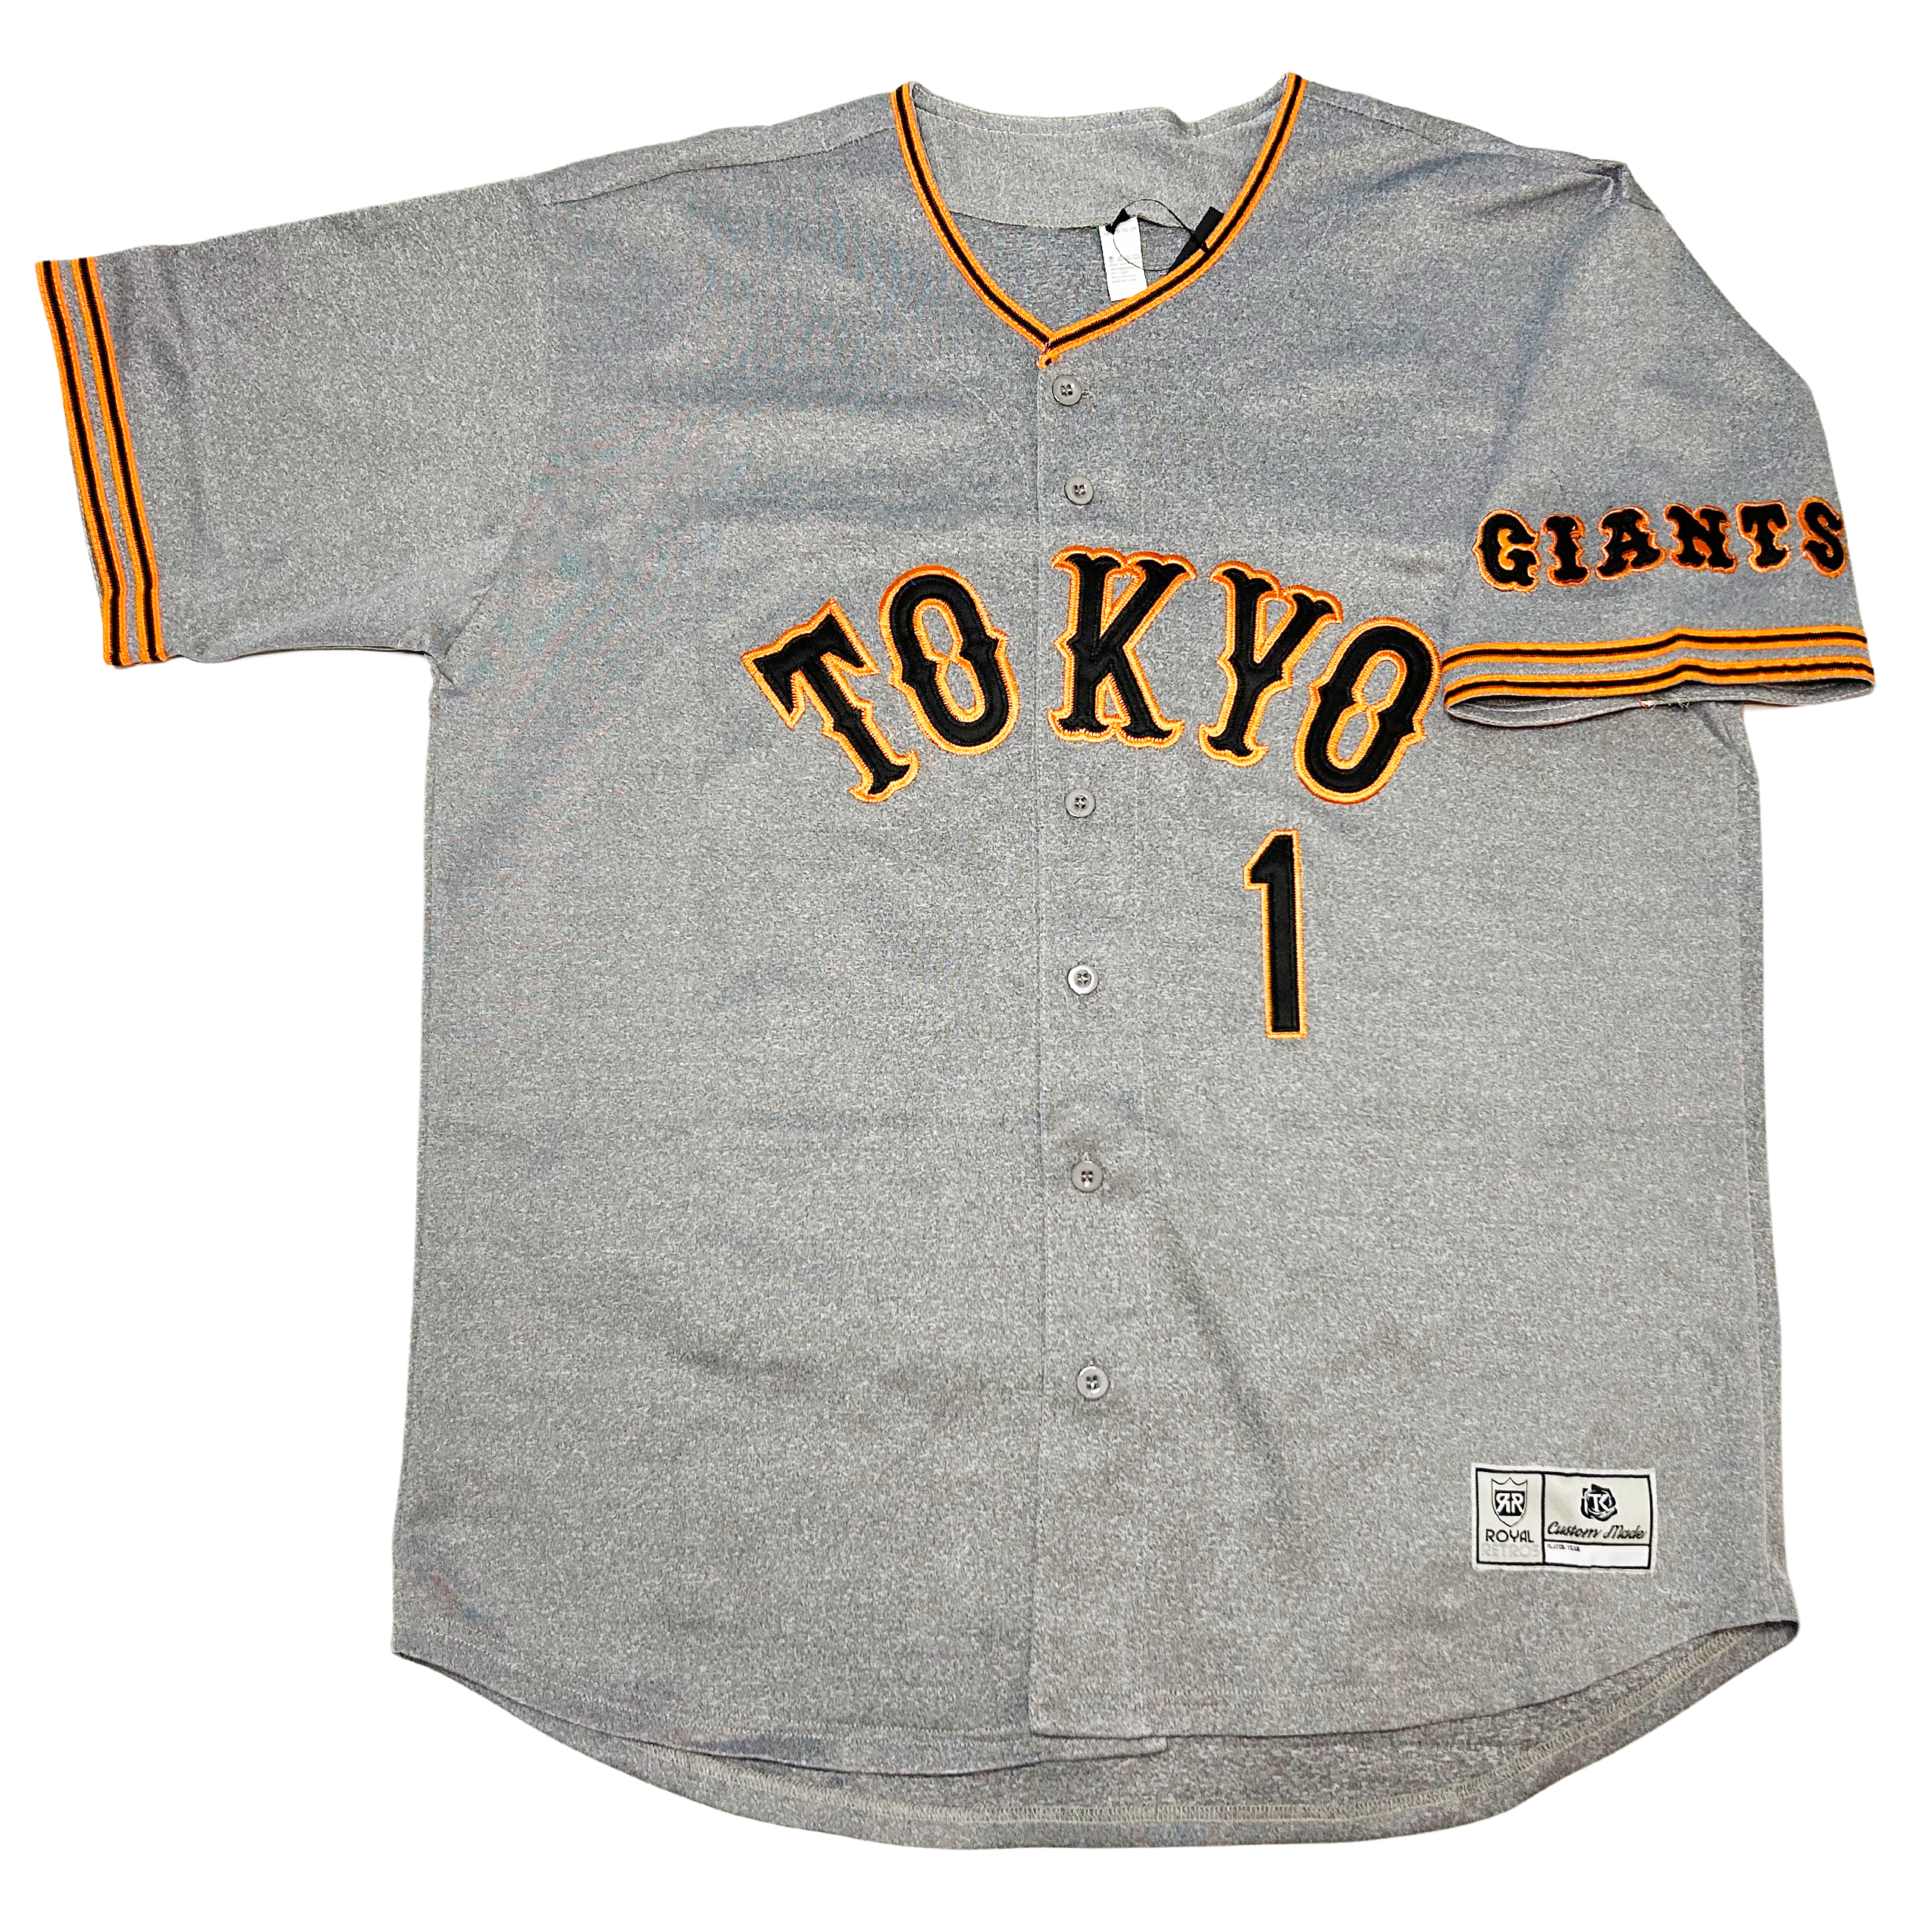 Custom Jersey, Authentic Giants Custom Jerseys & Uniform - Giants Store